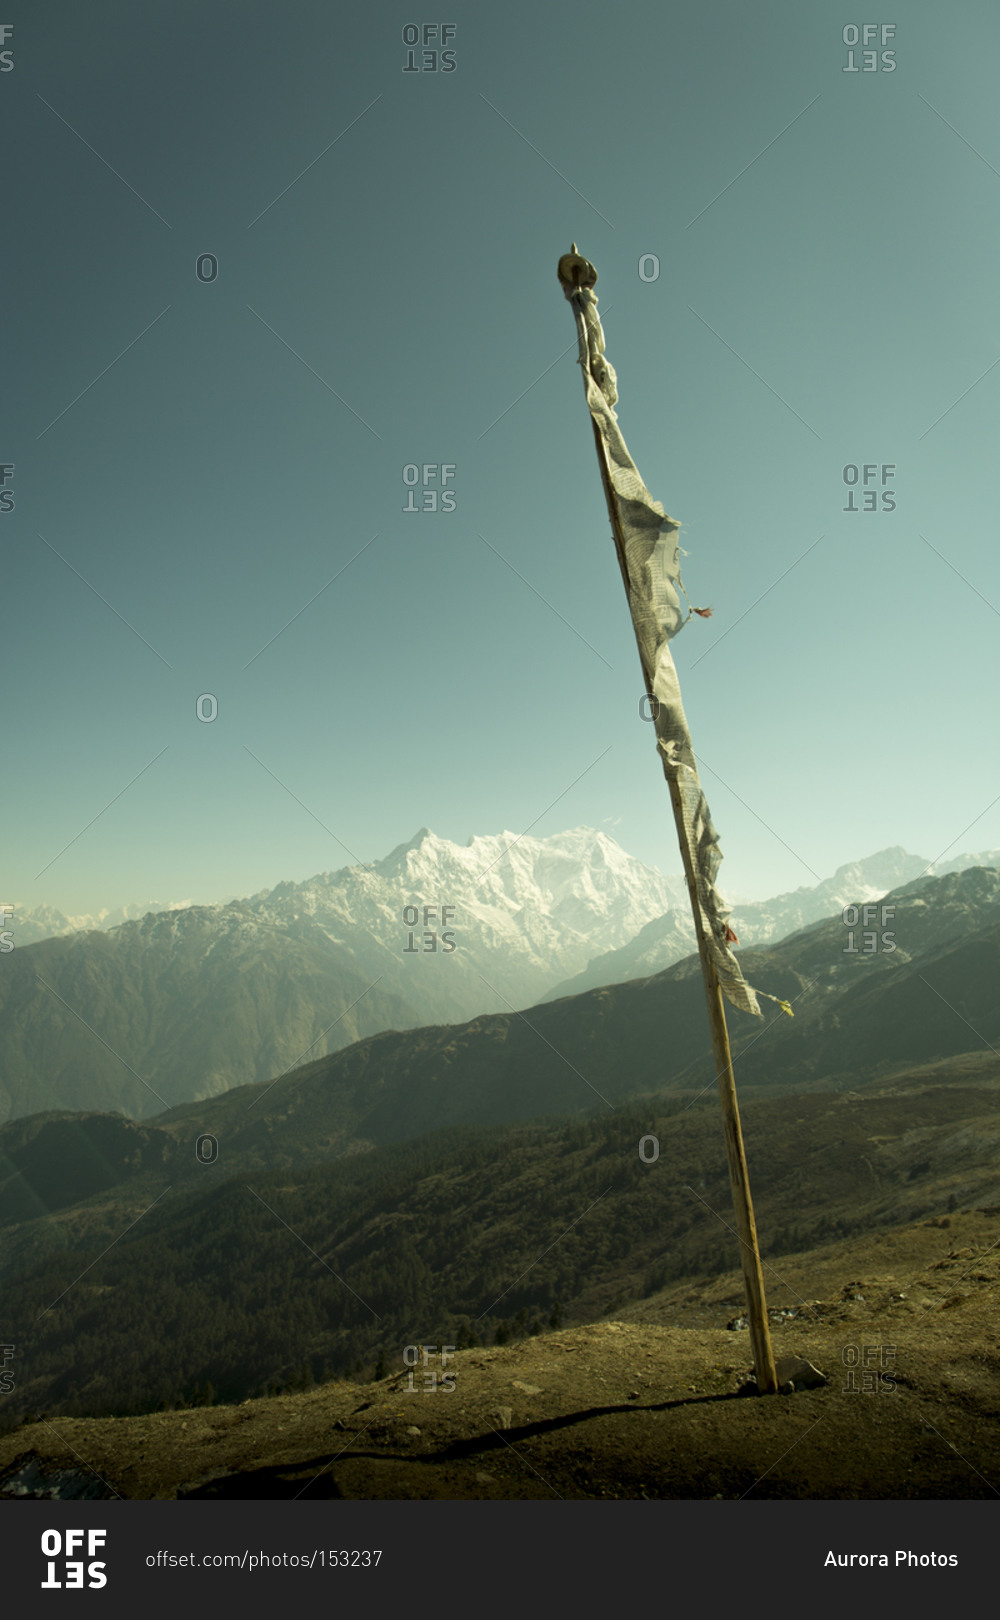 A prayer flag overlooks the Langtang Region of Nepal's Himalayan Mountain Range